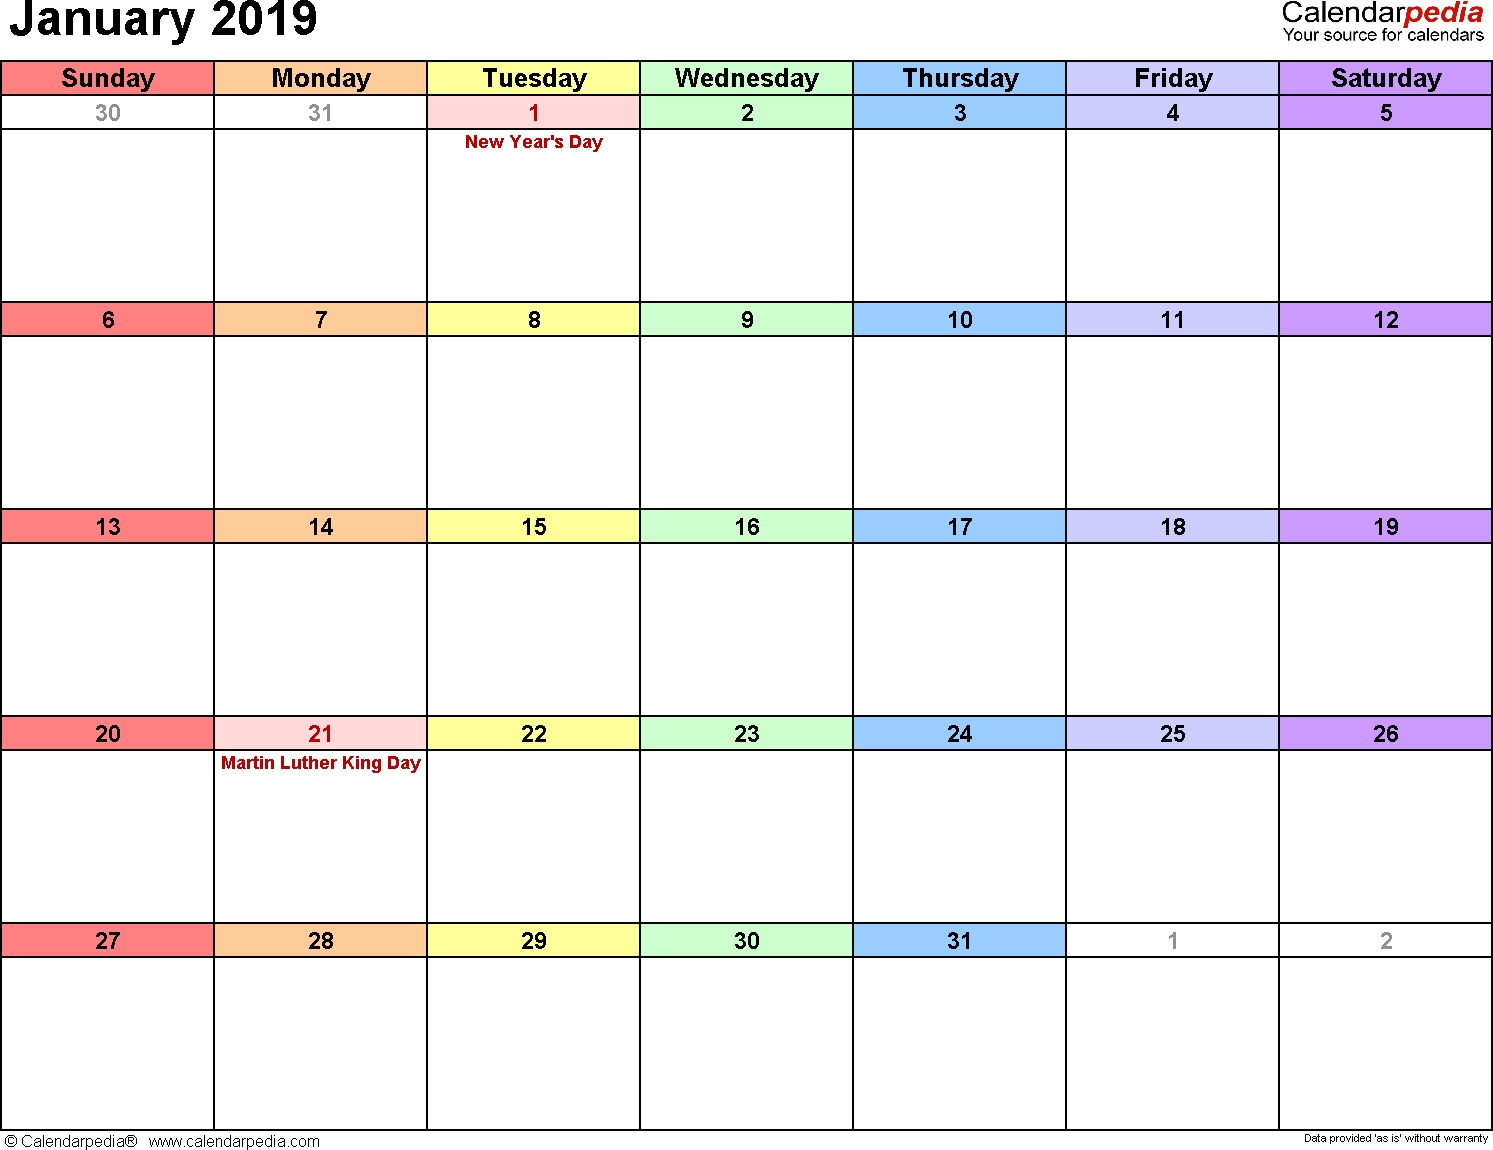 Calendarpedia - Your Source For Calendars Calendar Month Notice Period South Africa